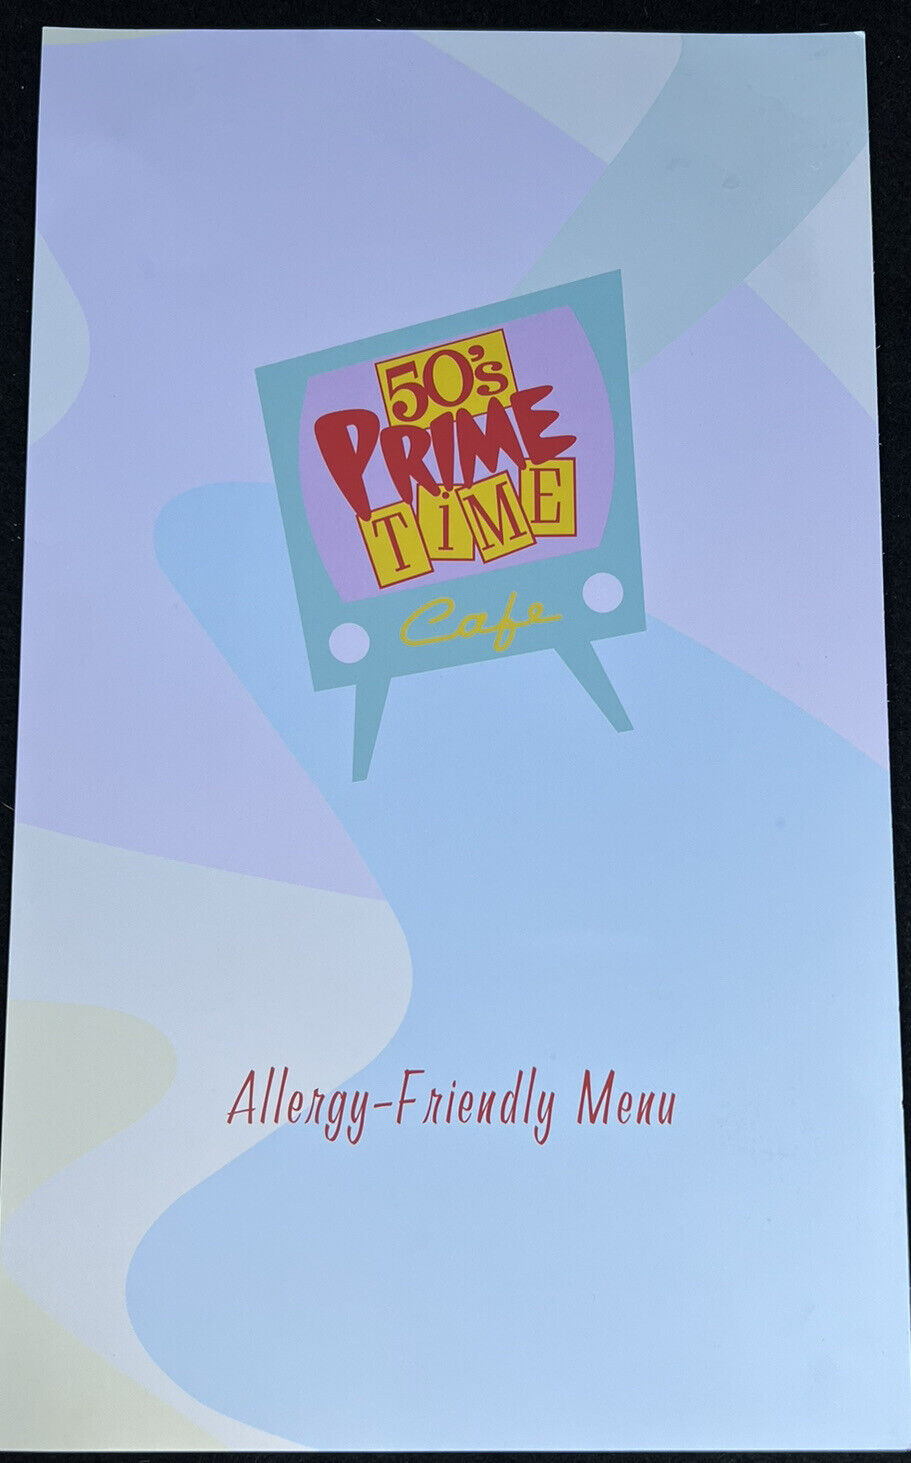 DISNEY WORLD 50s Prime Time Cafe Restaurant ALLERGY Menu Hollywood Studios 3/23